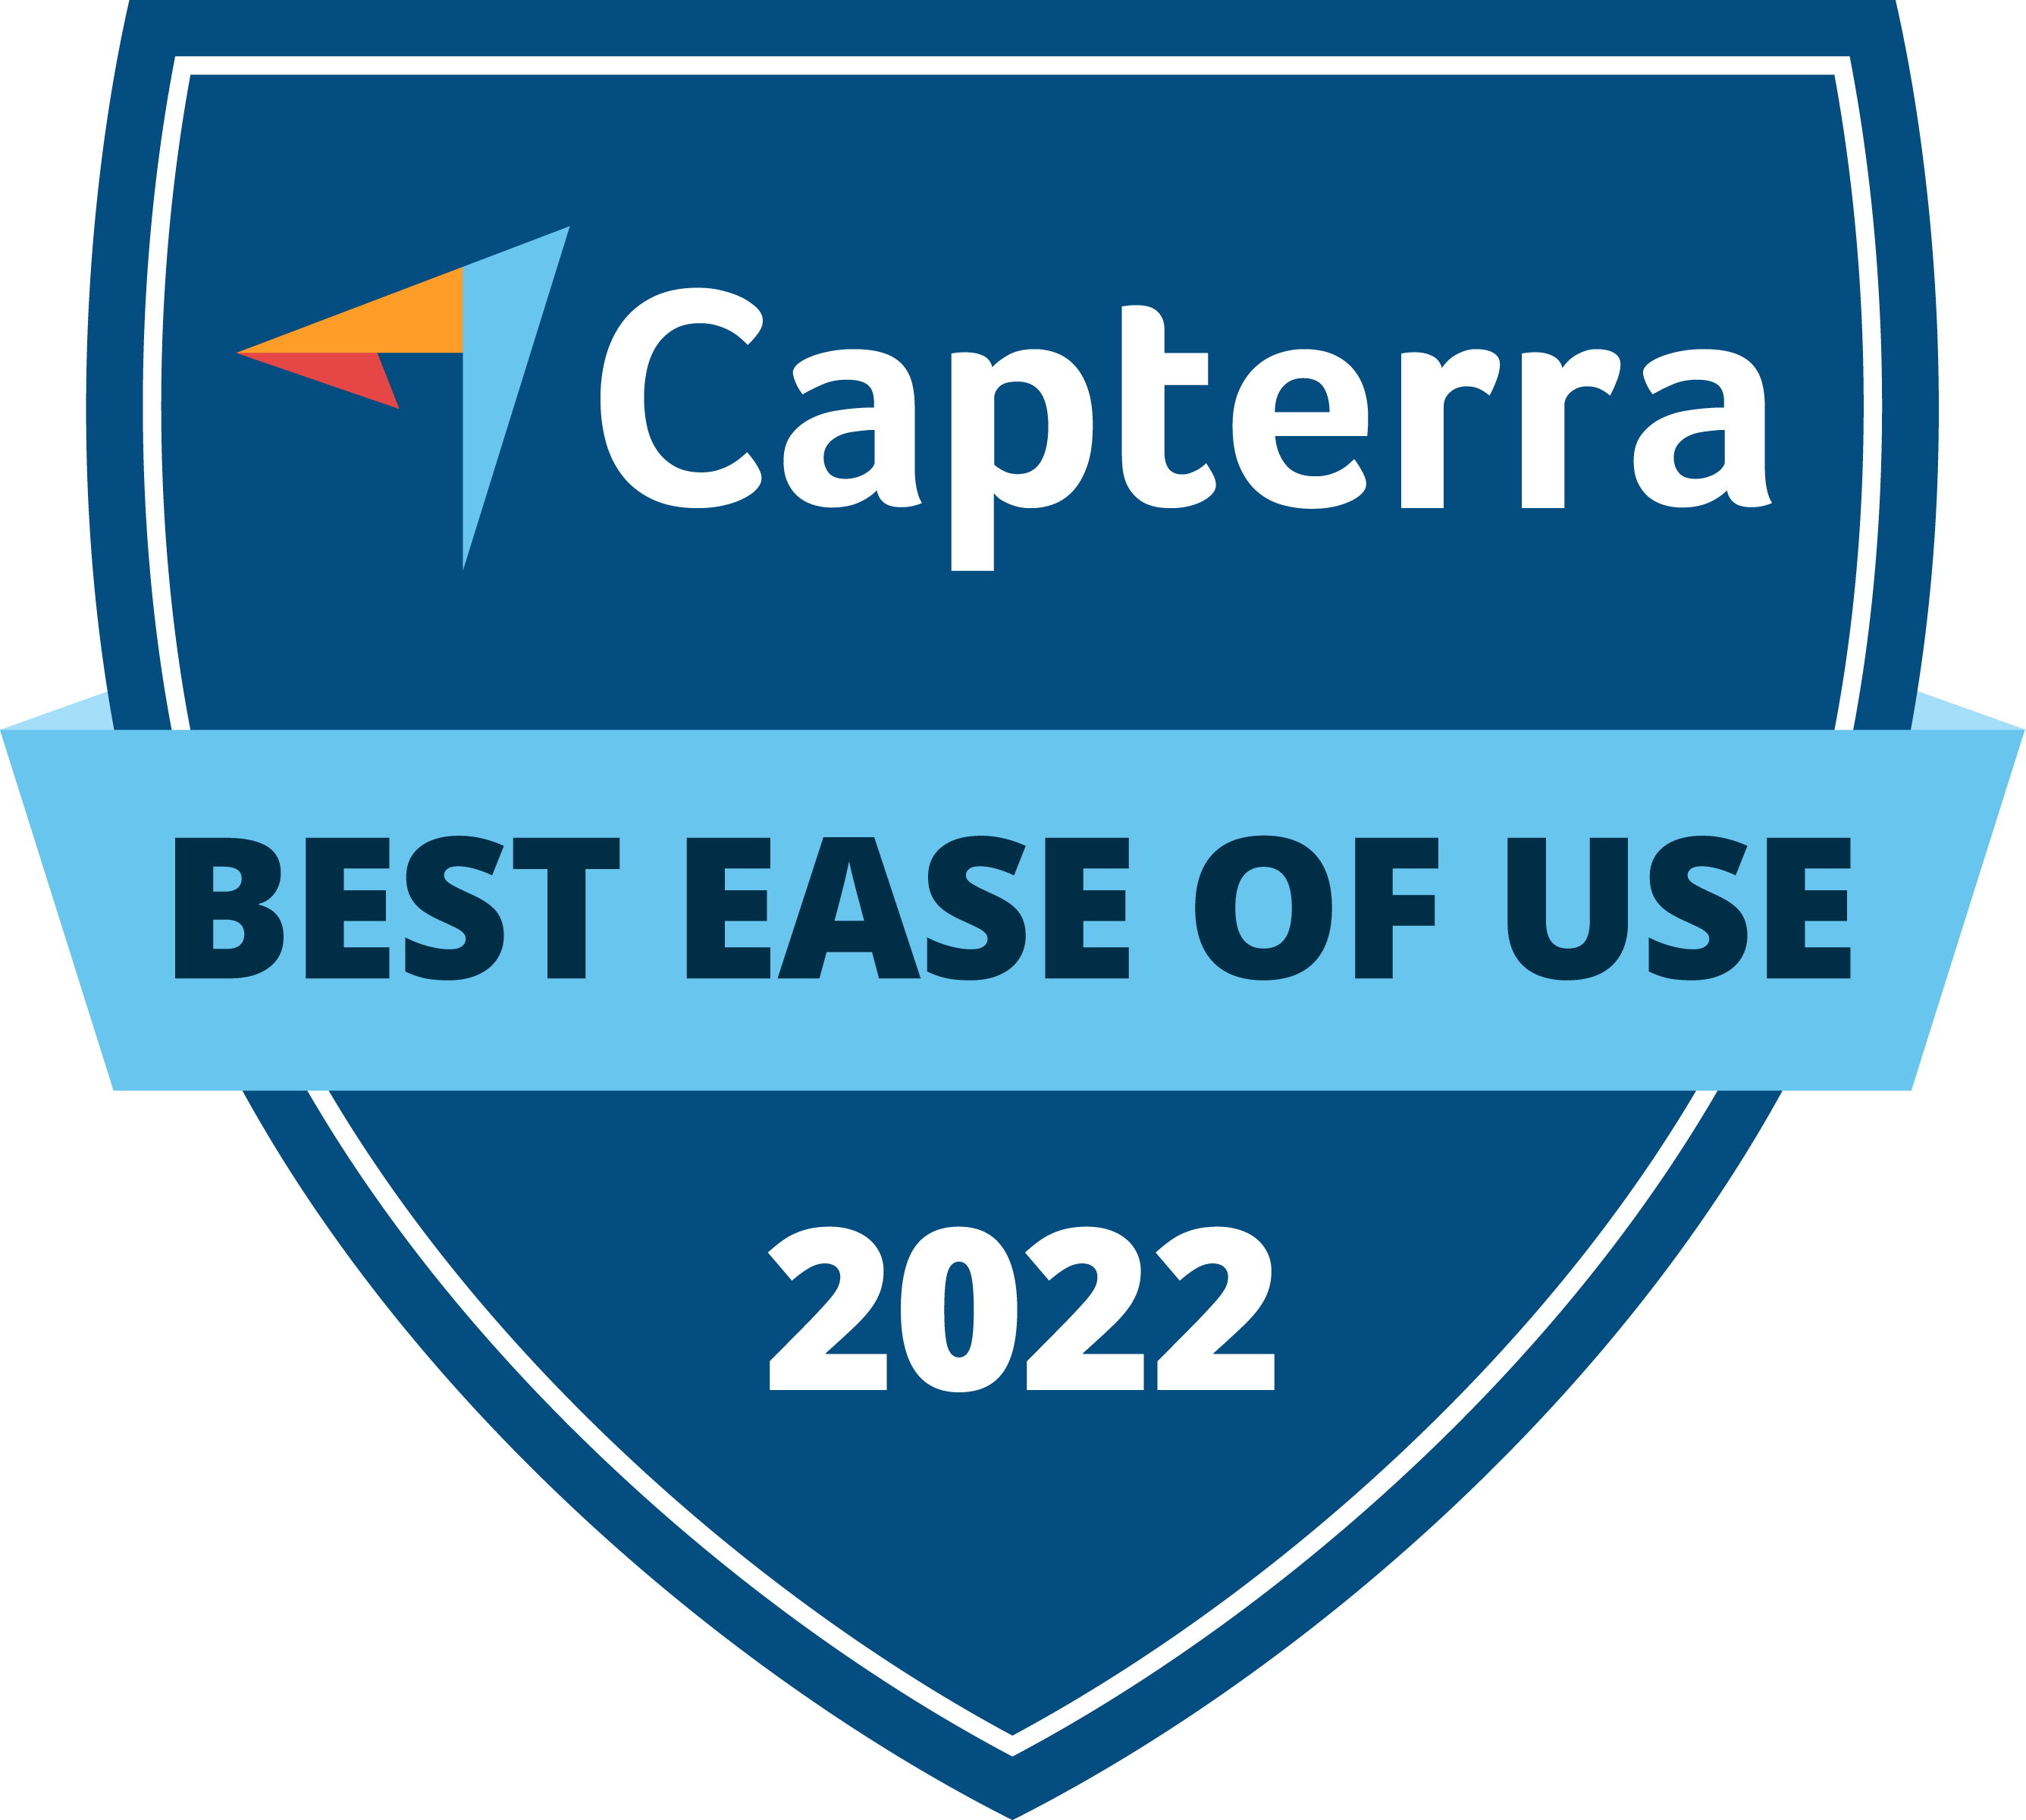 Capterra Job Board Software Best Ease Of Use 2022